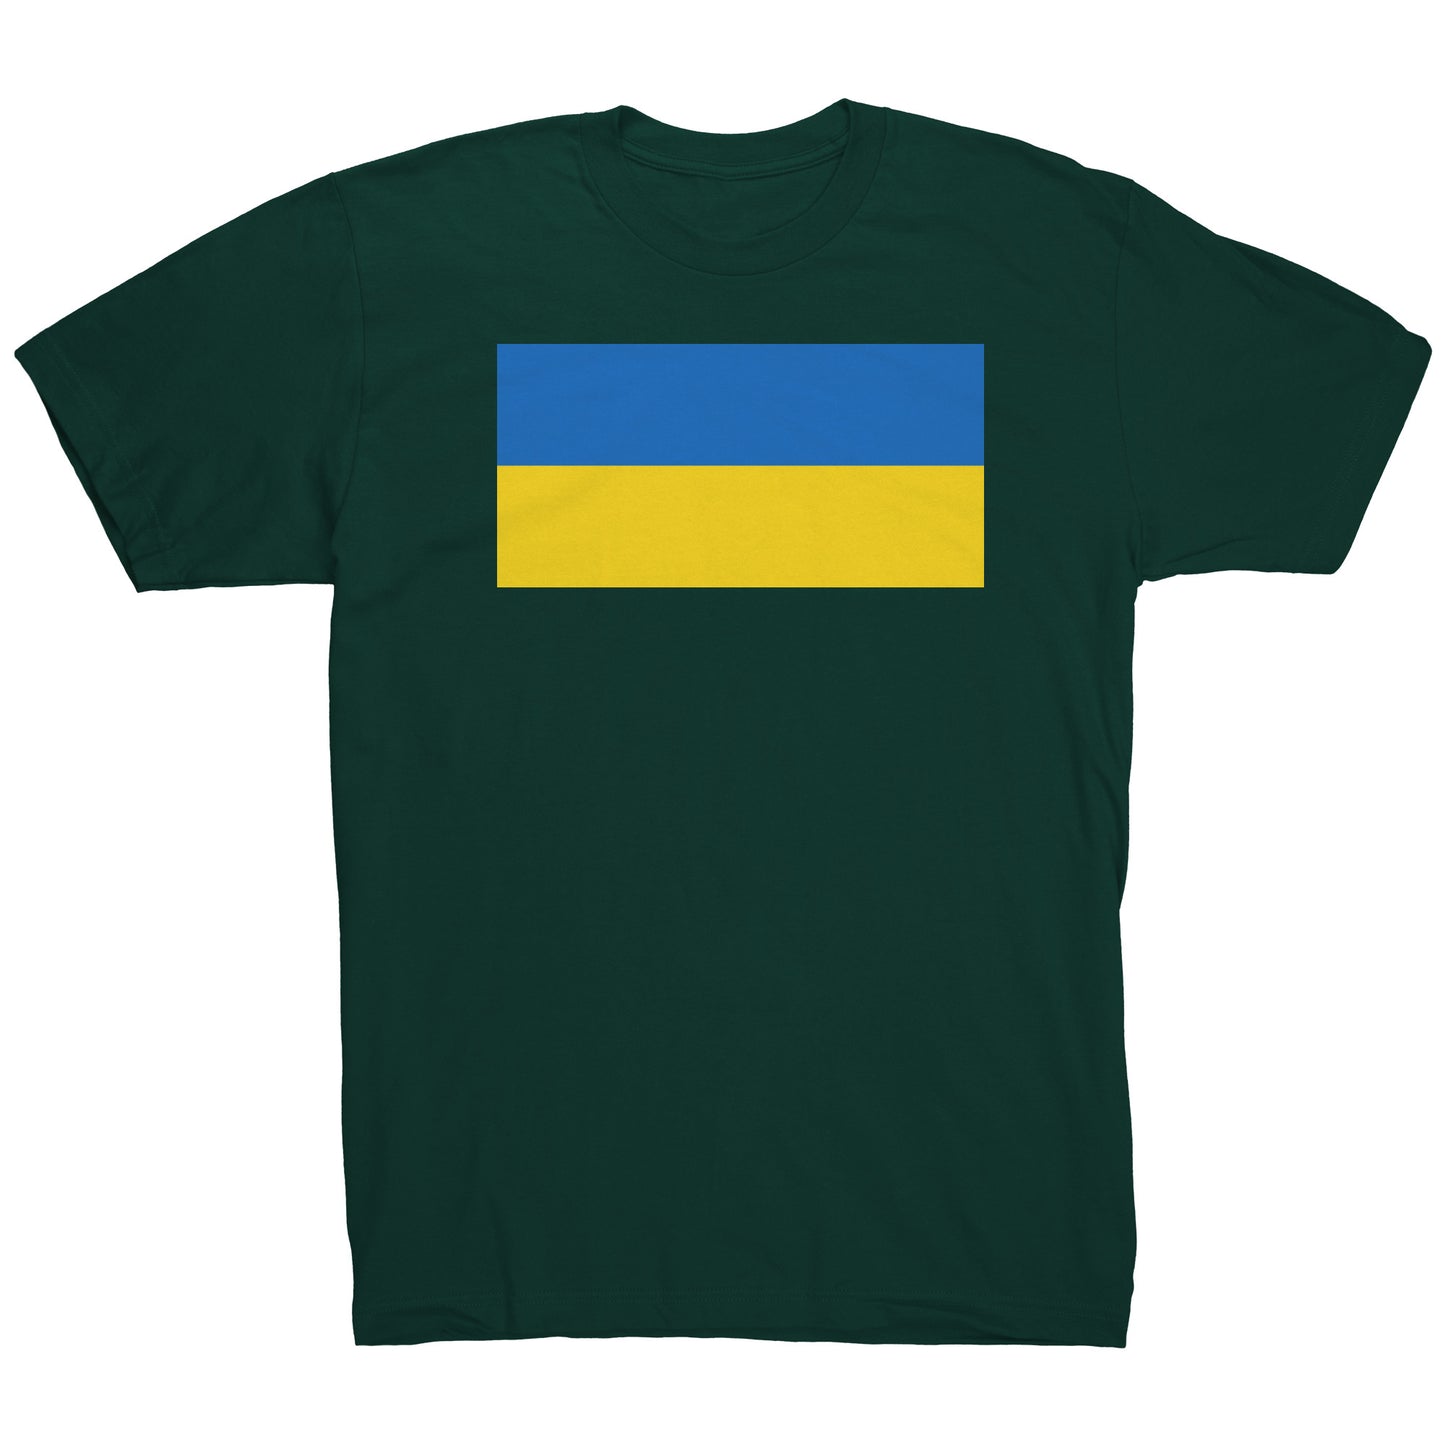 The Flag of Ukraine